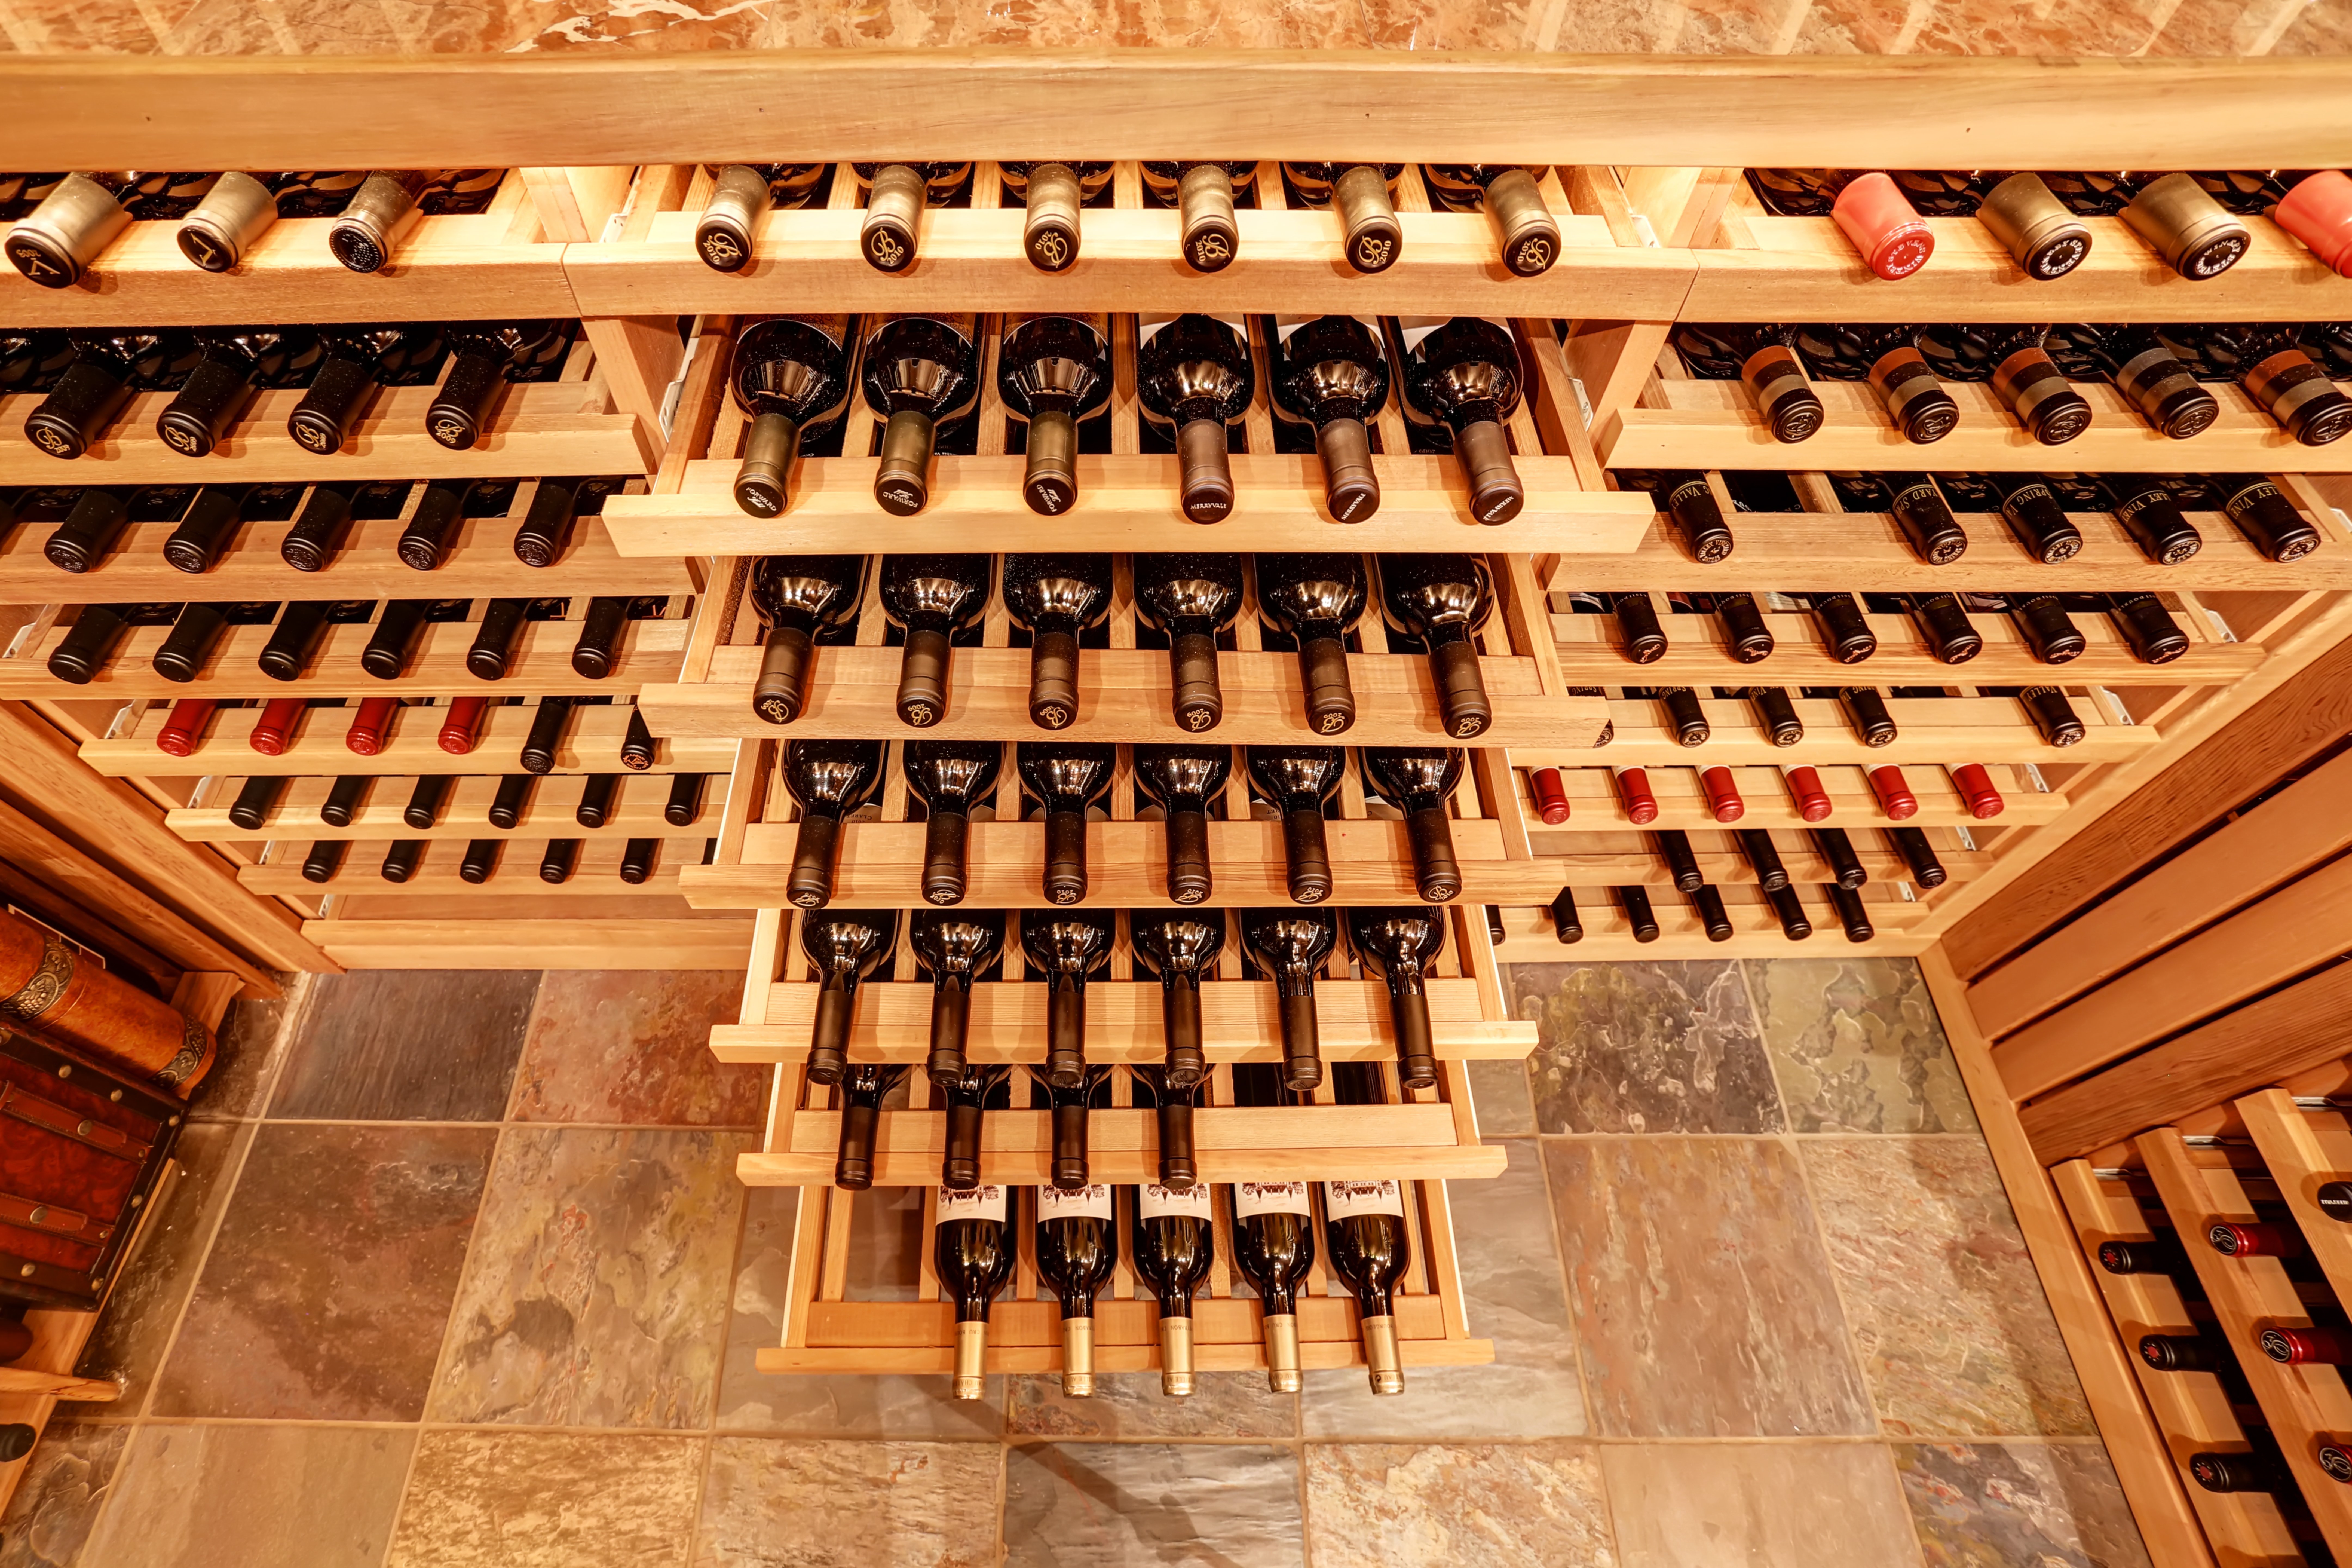 Custom Built Wine Cellars